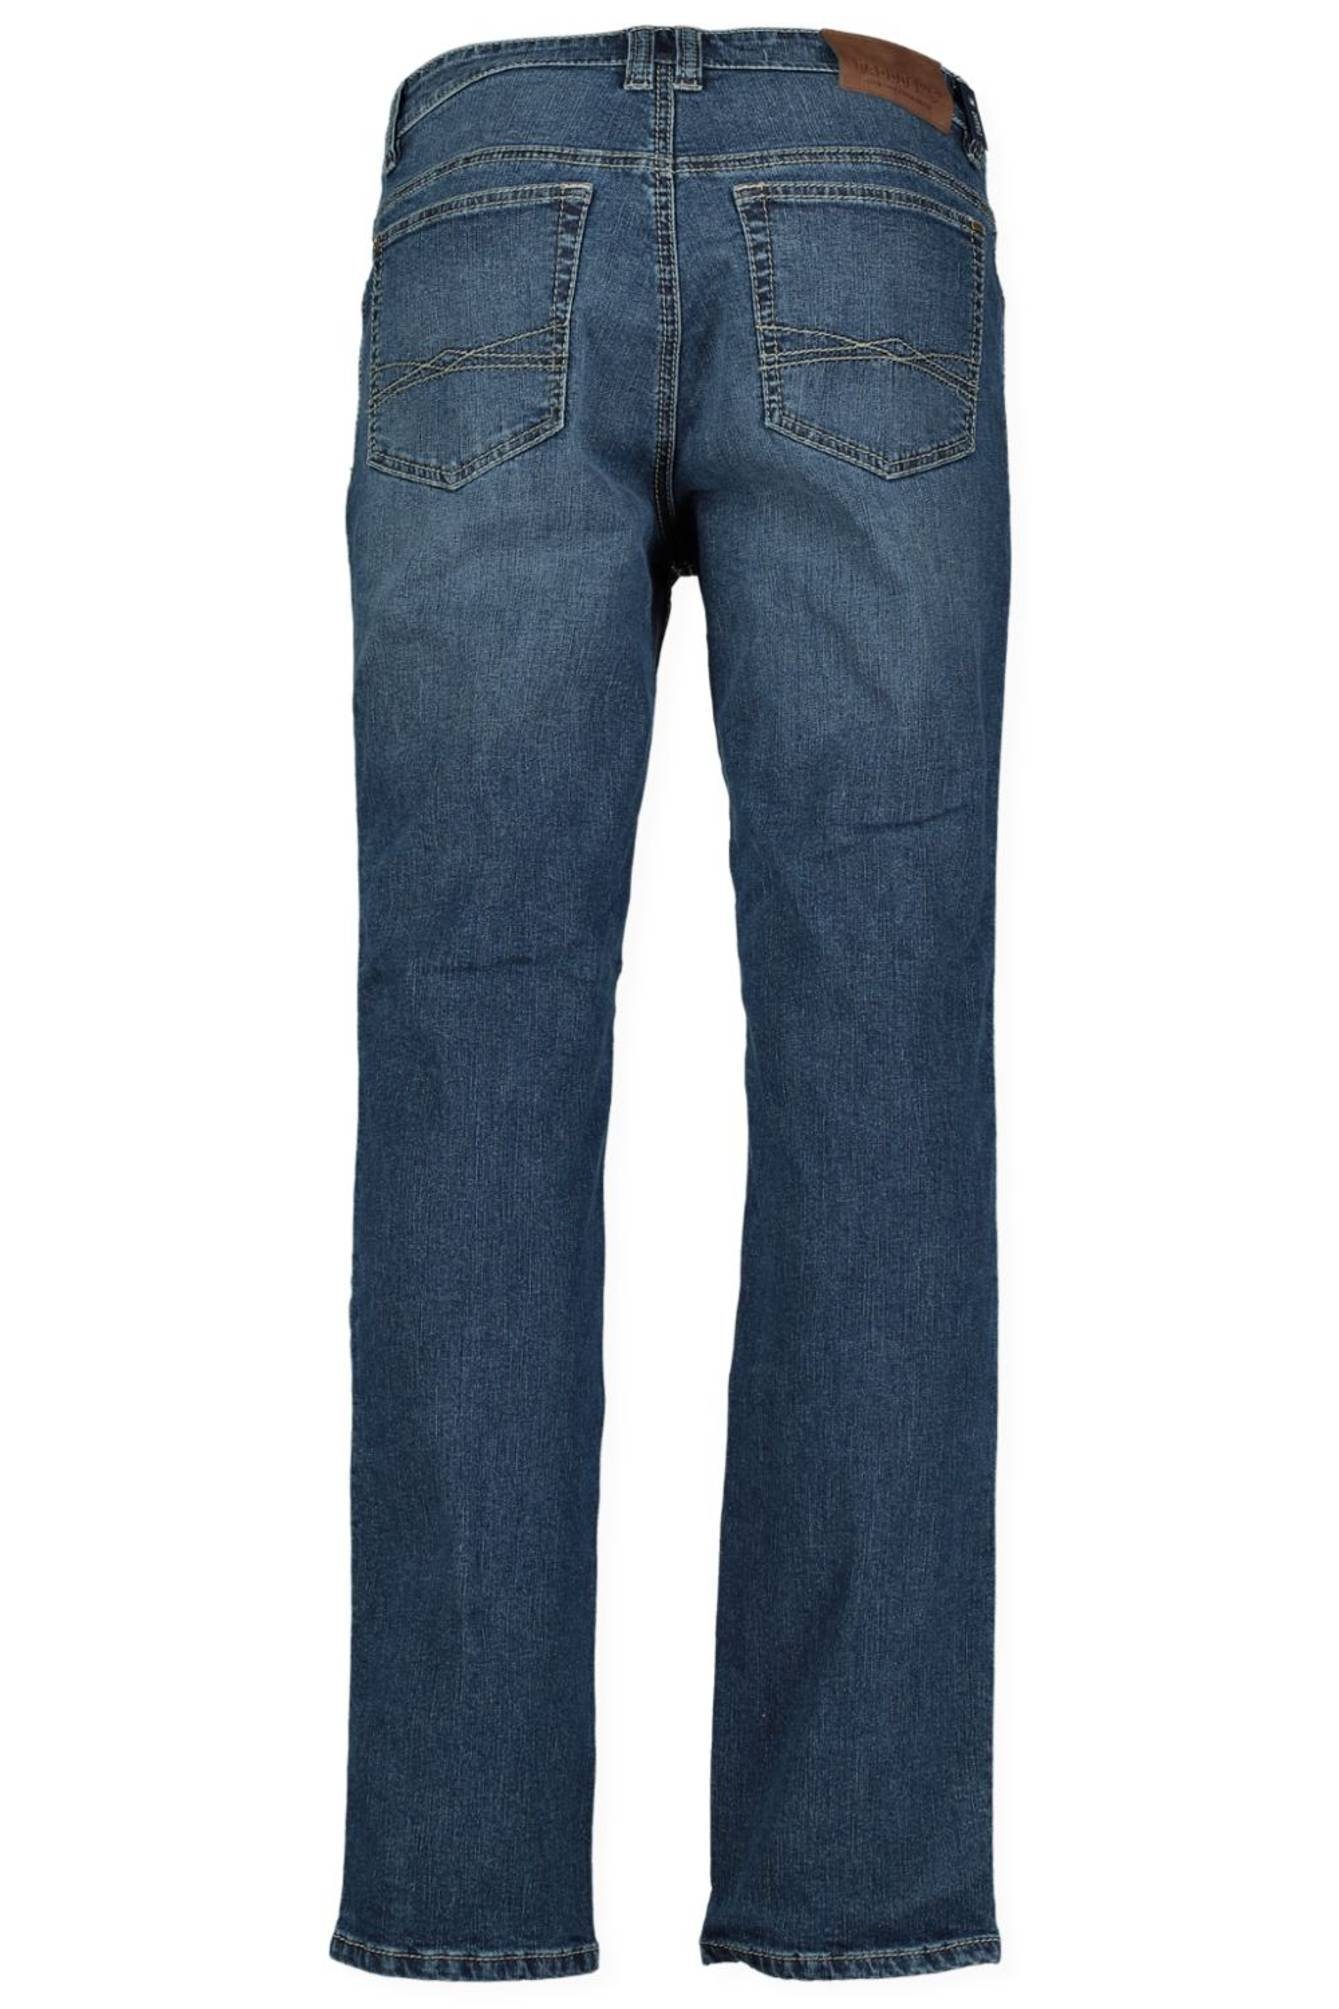 000 mid blue (4349) 80227 6734 Paddock's 5-Pocket-Jeans